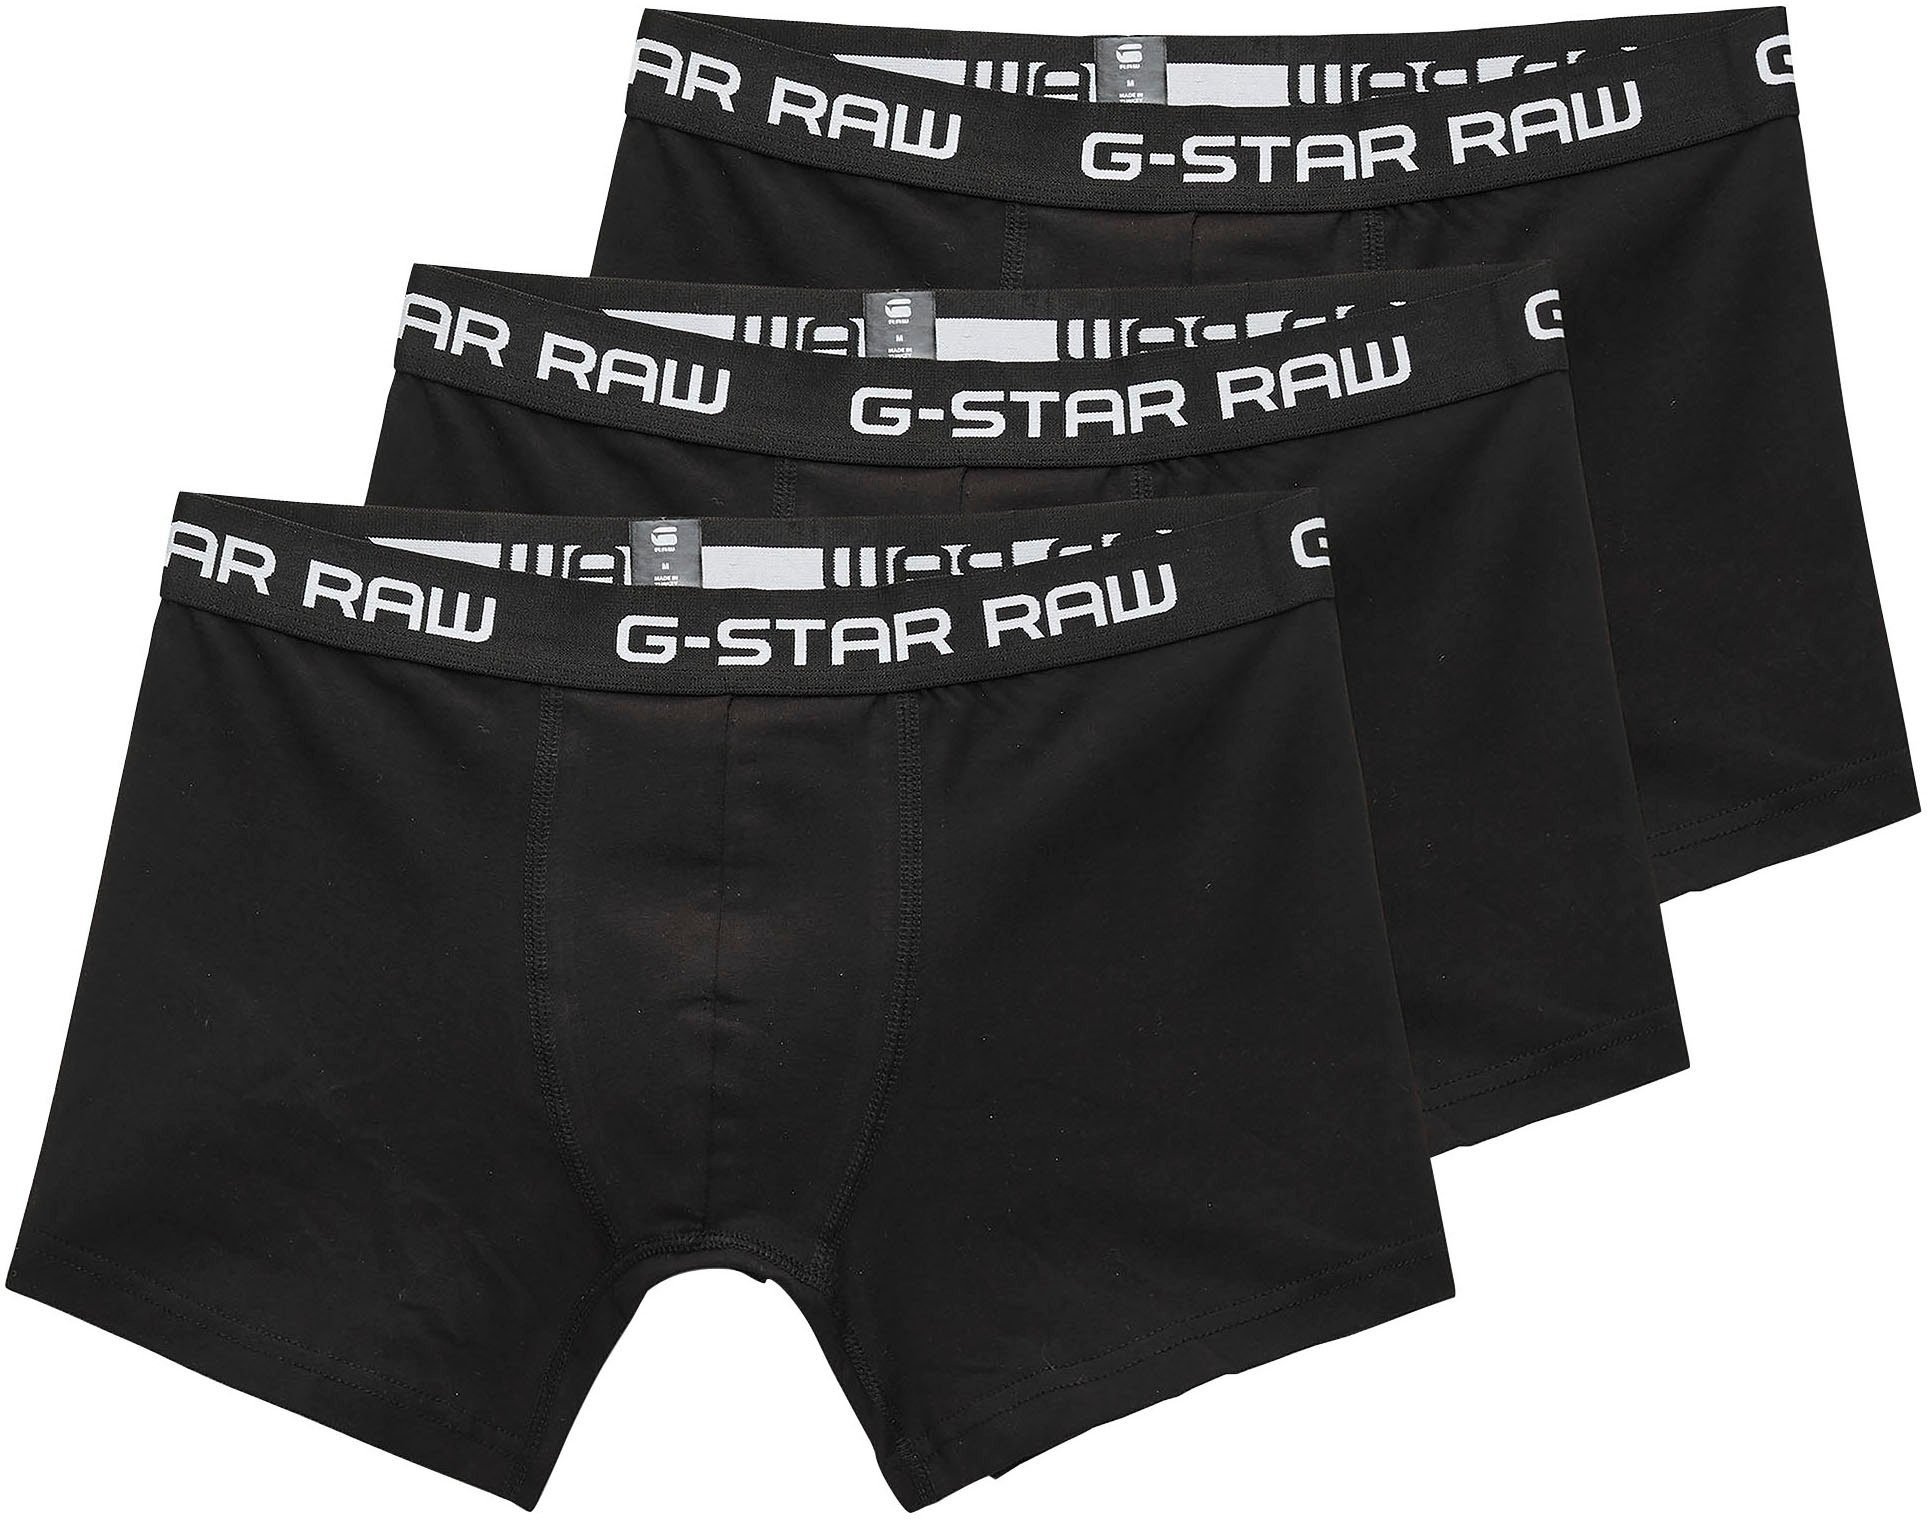 G-Star RAW Boxershort Classic trunk 3 pack 3 stuks, 3) makkelijk gevonden | OTTO